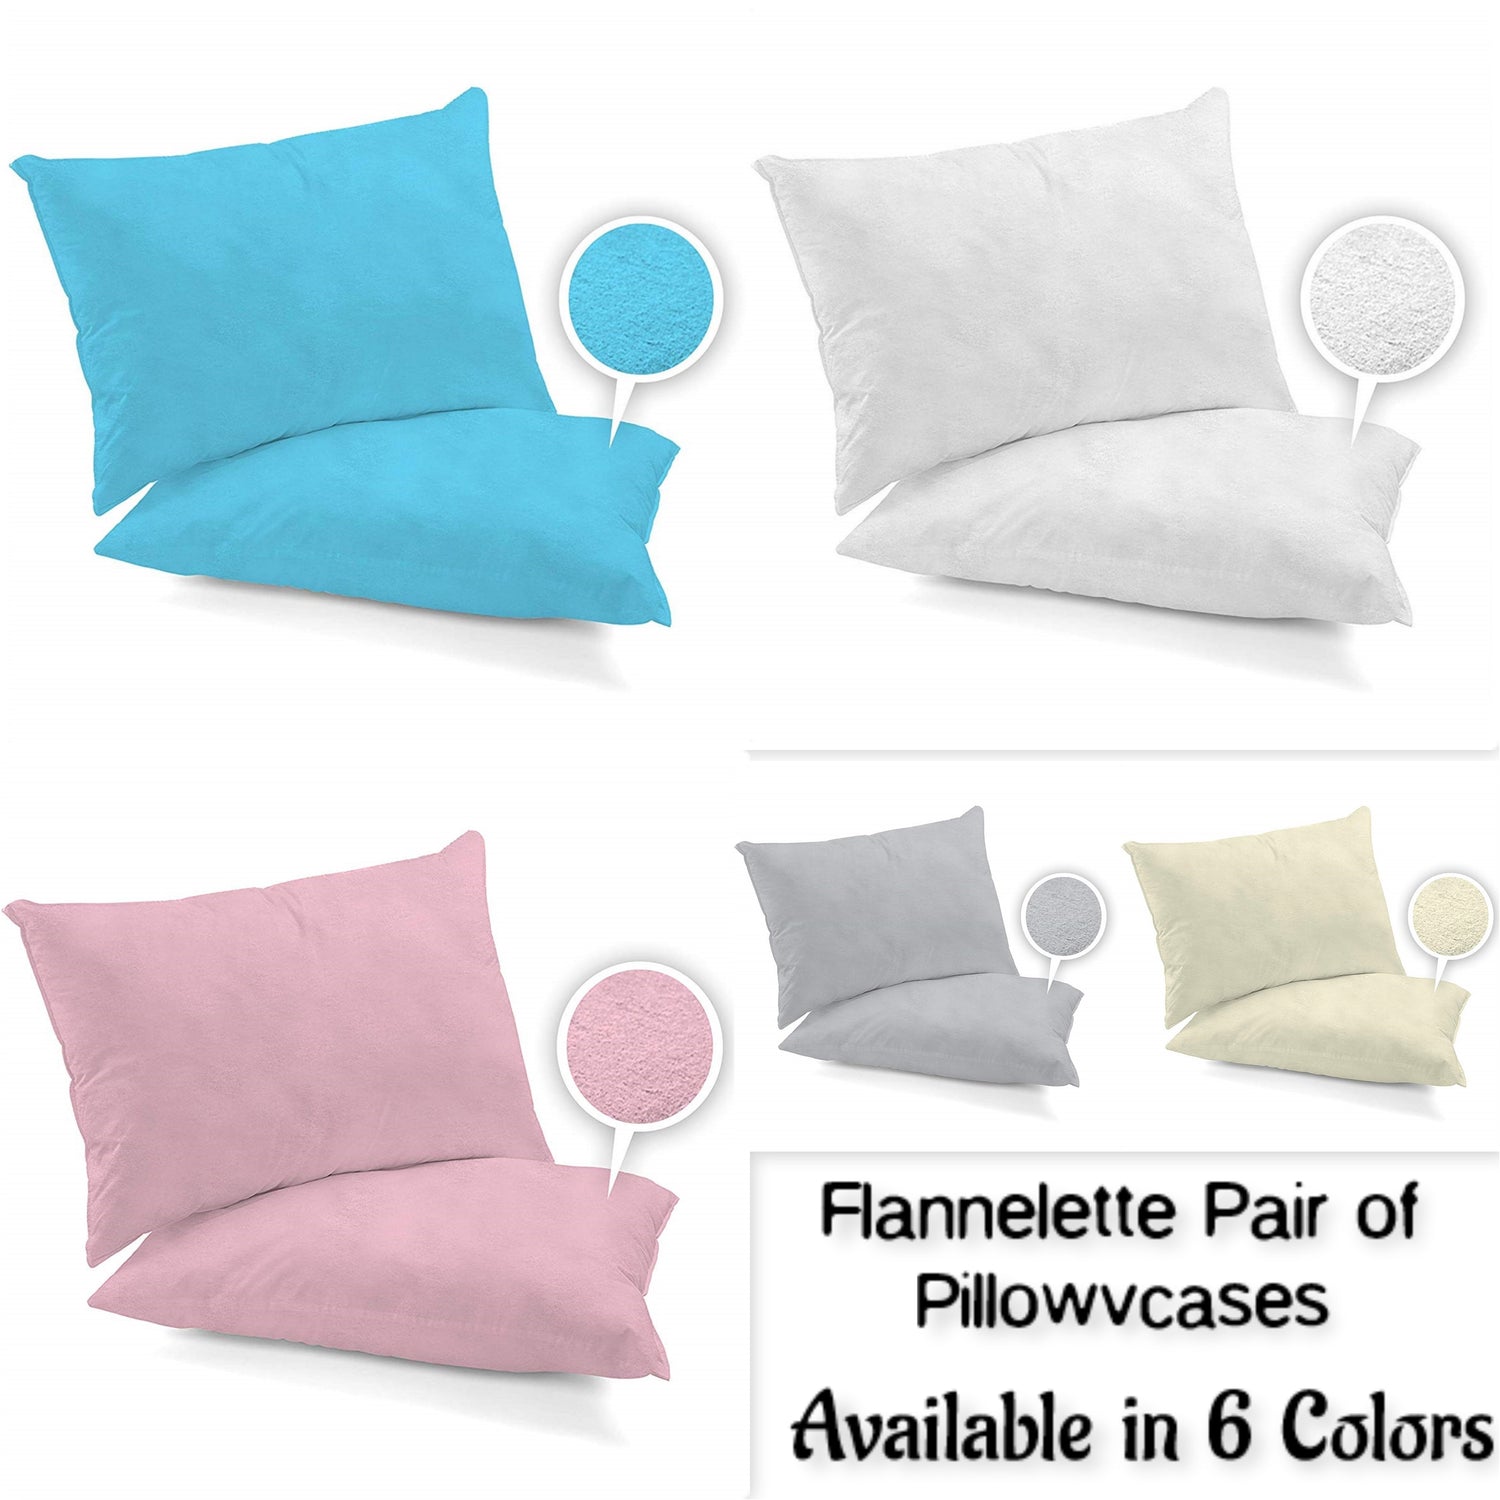 Flannelette Pillowcase